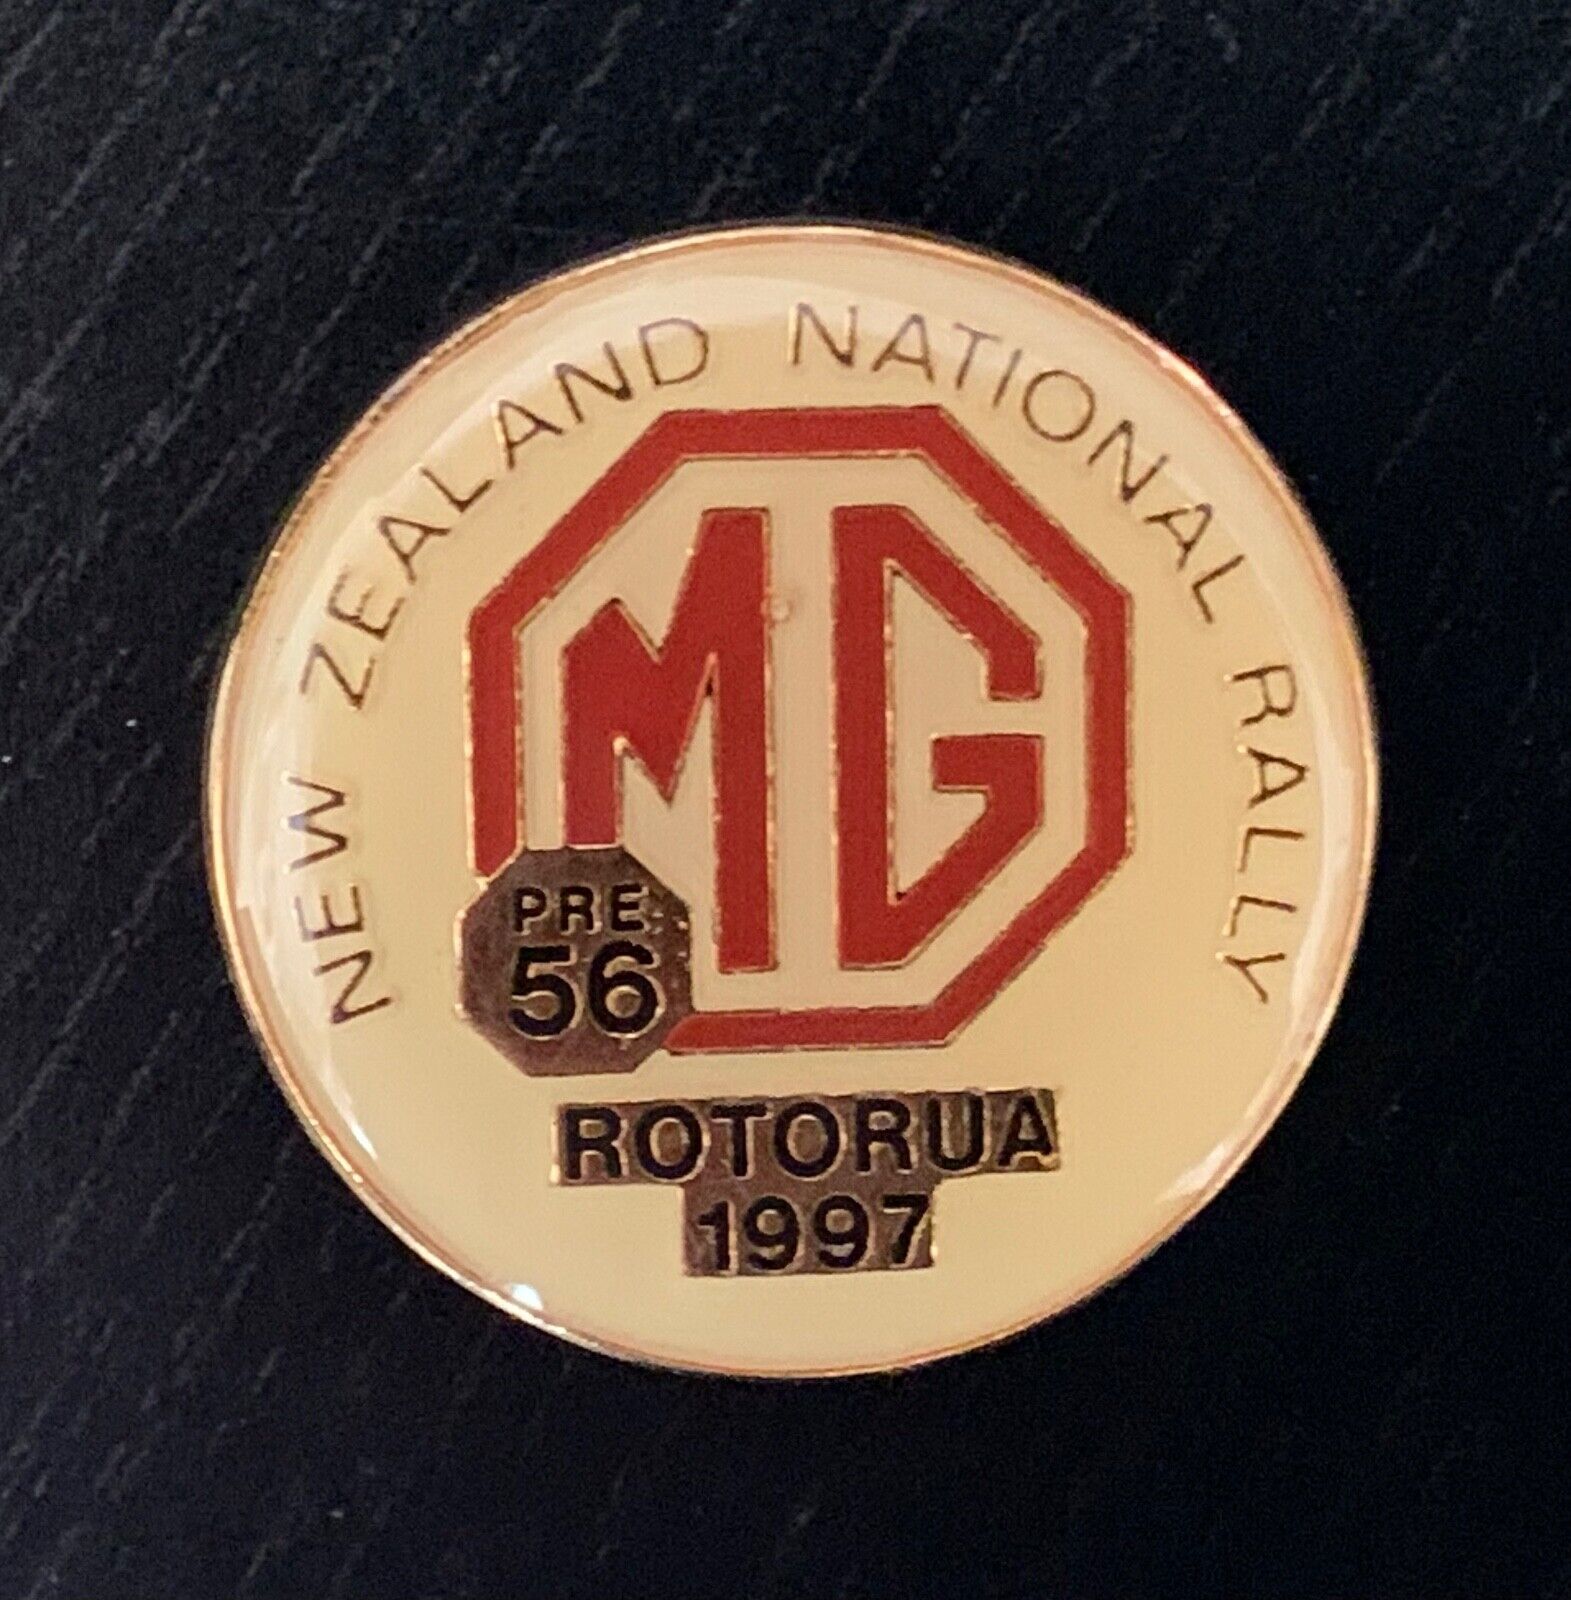 Vtg MG Emblem Button Metal Badge New Zealand National Rally PRE 56 Rotorua 1997